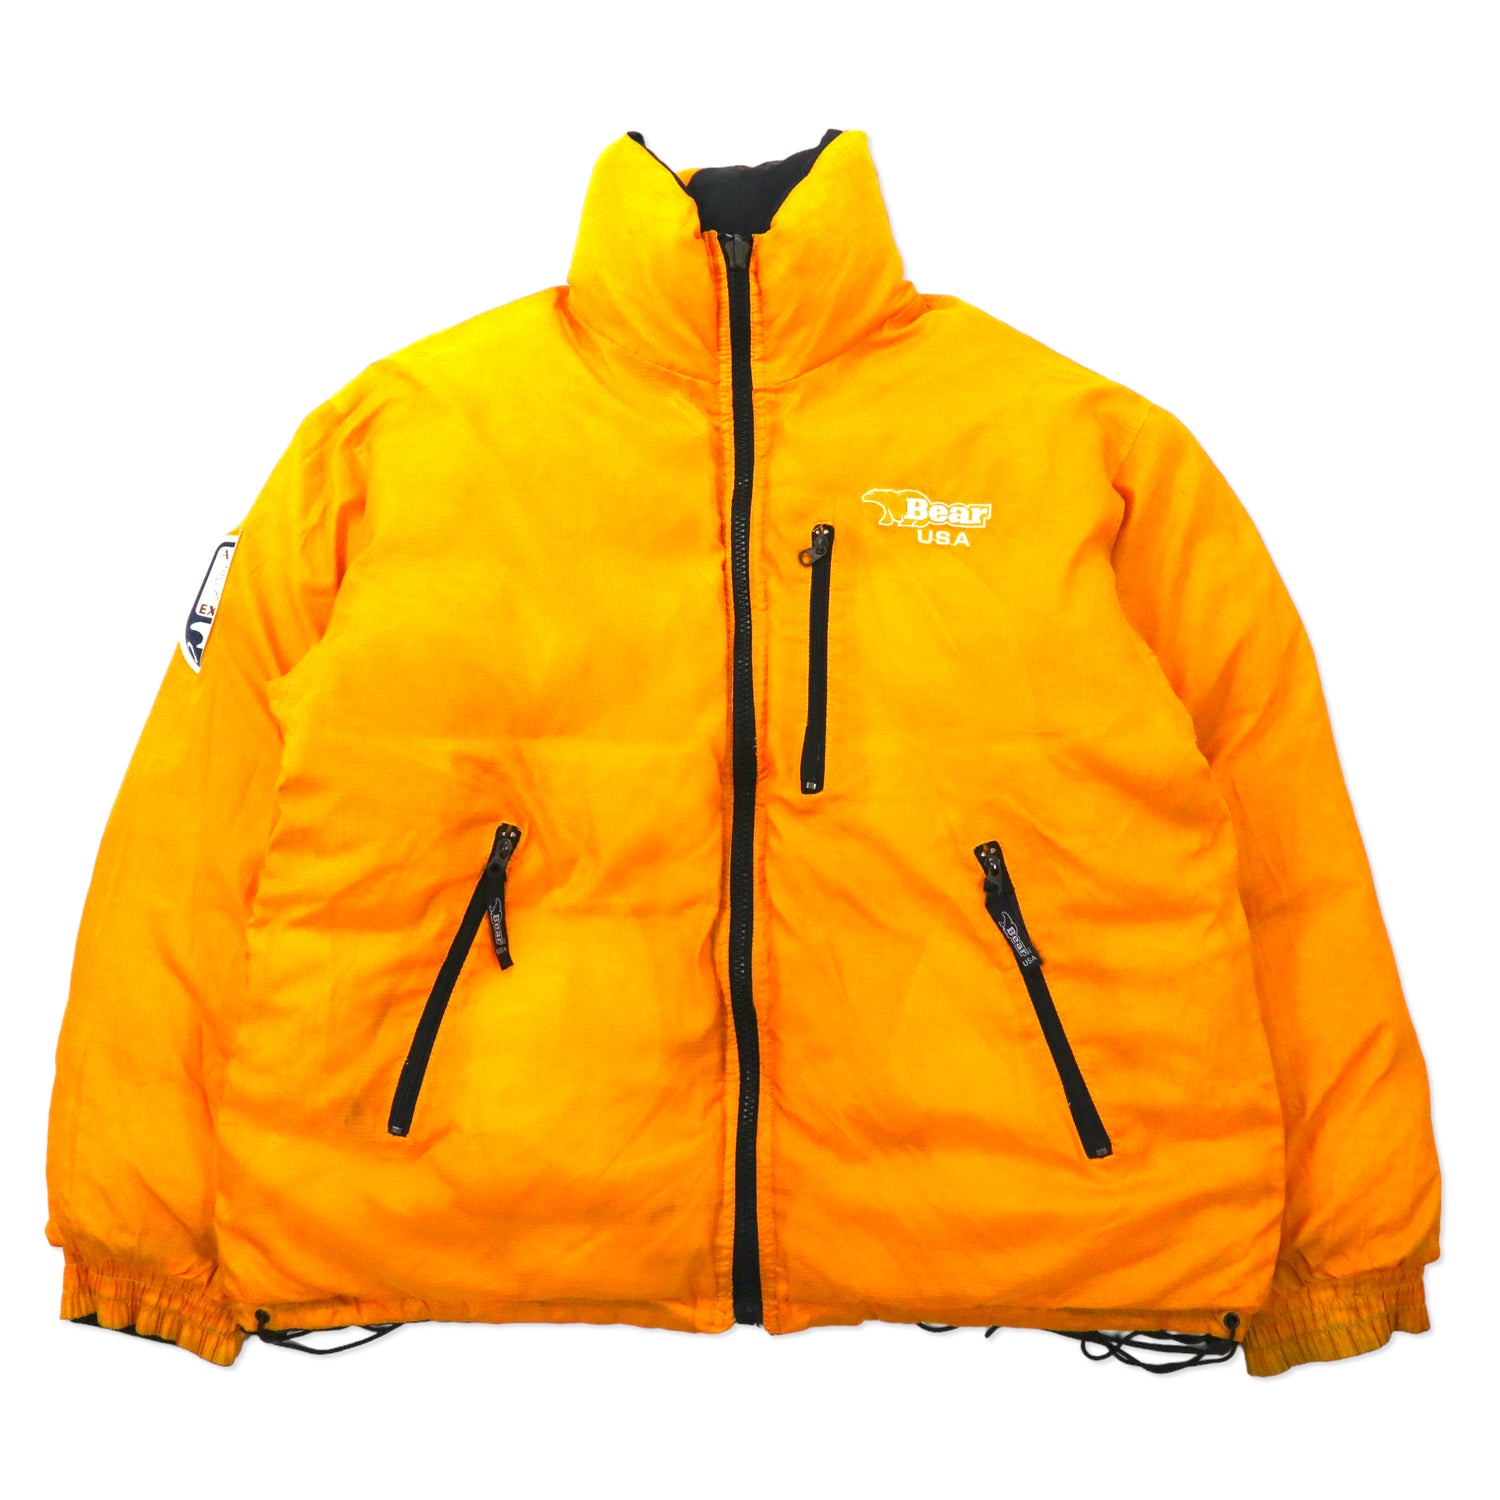 Bear USA 90's Reversible Puffer Jacket XL Black Yellow – 日本然リトテ